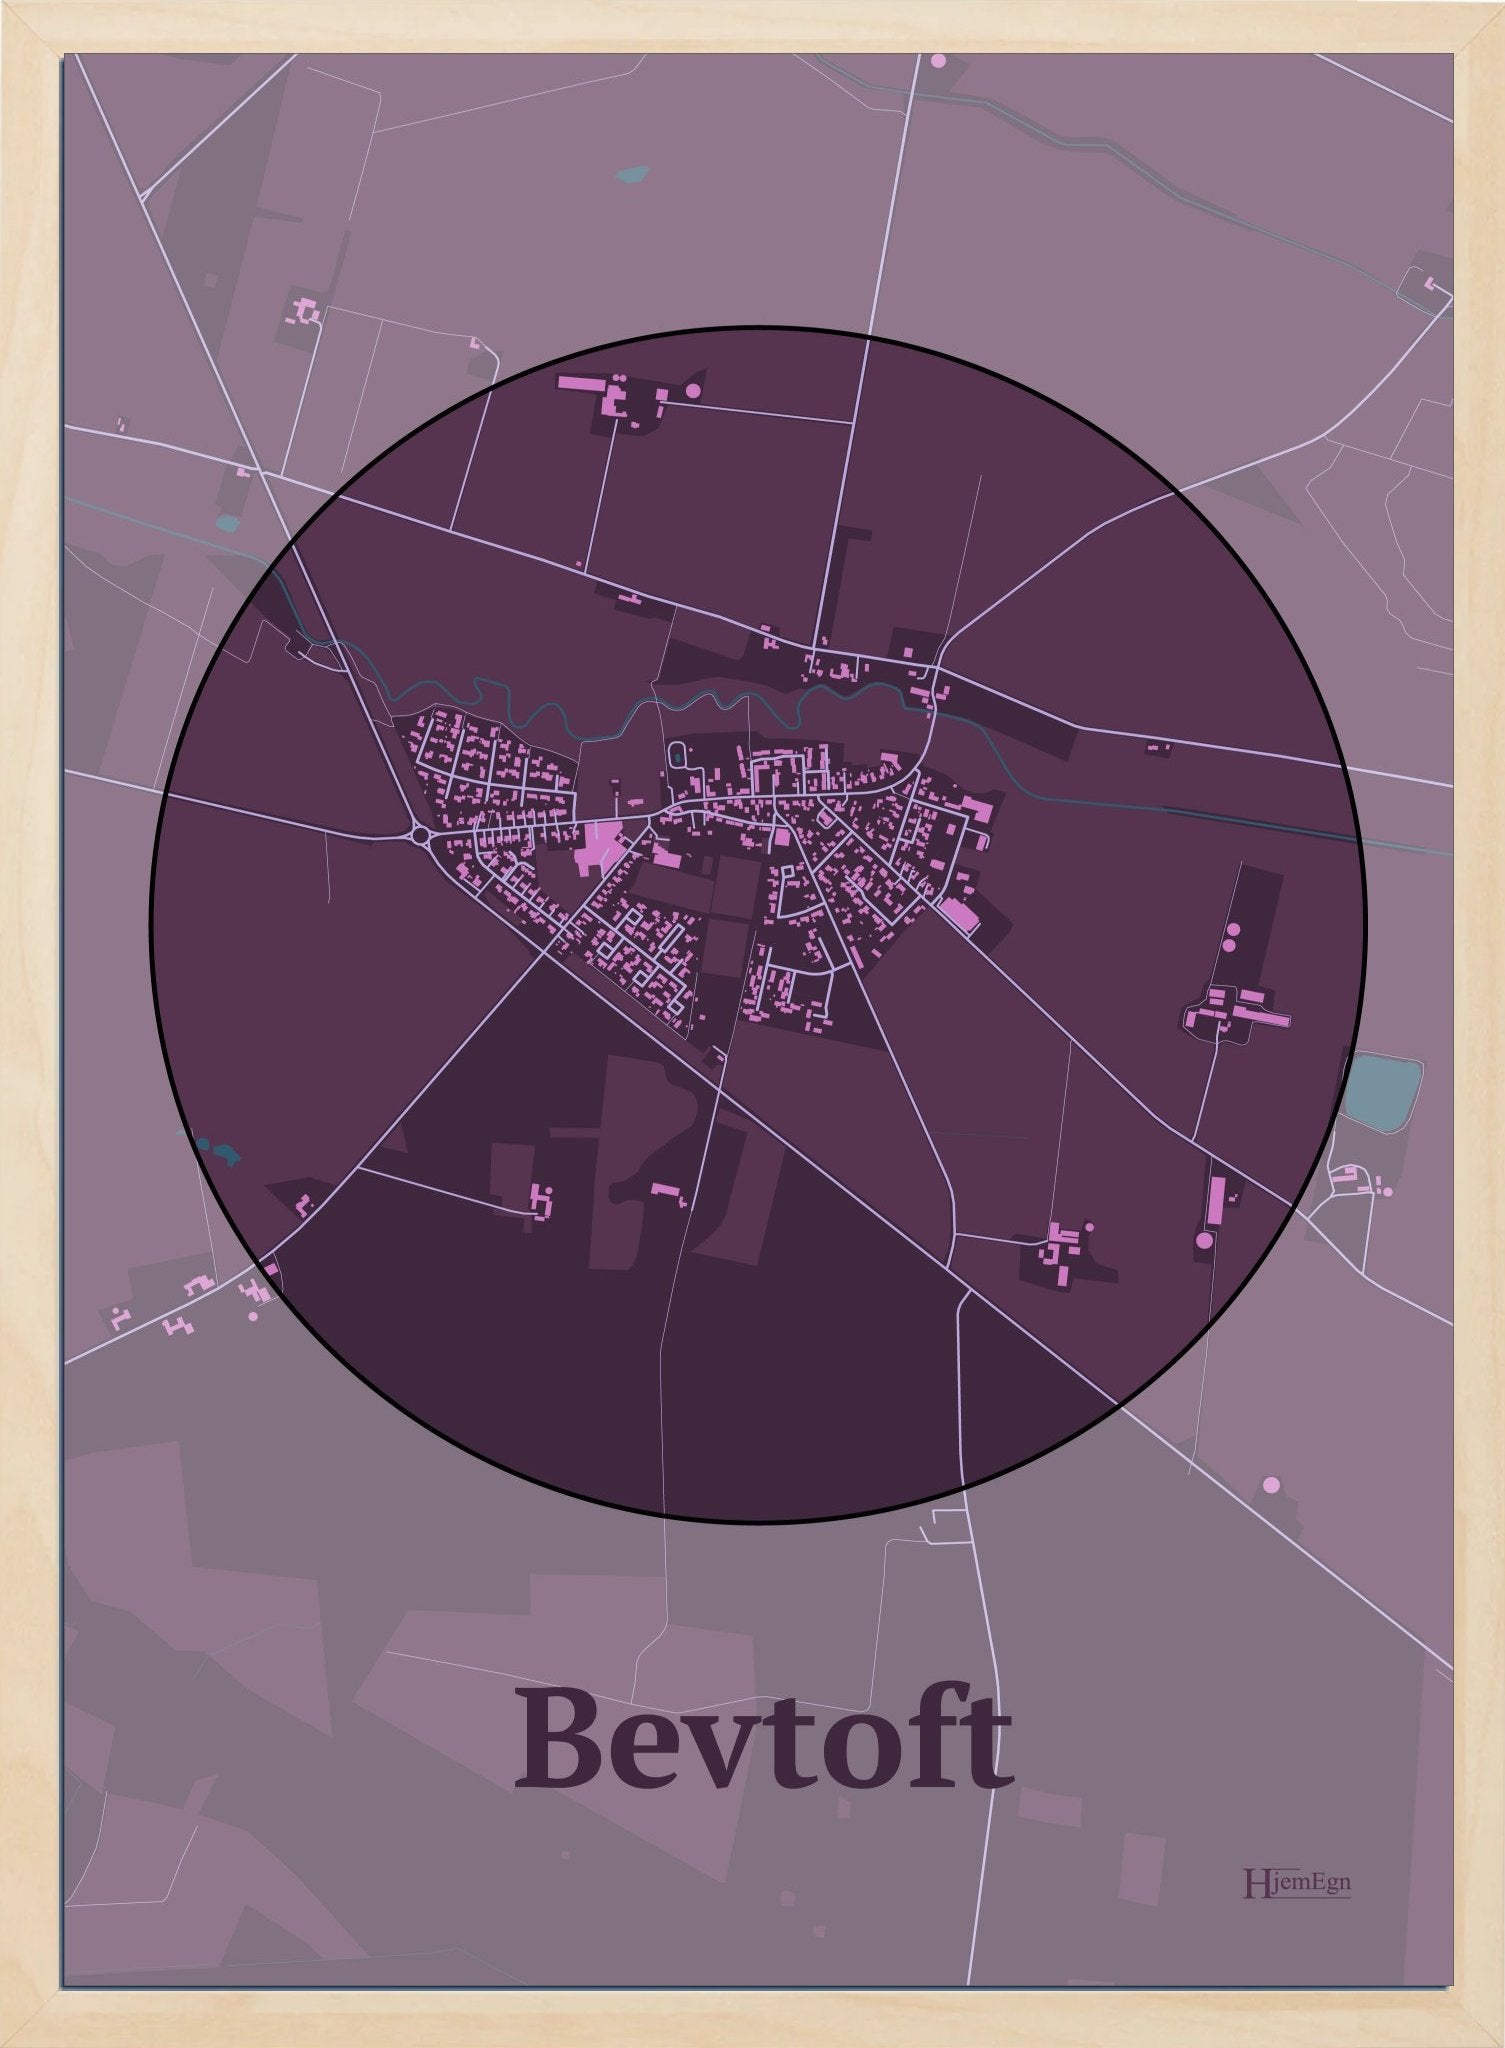 Bevtoft plakat i farve mørk rød og HjemEgn.dk design centrum. Design bykort for Bevtoft